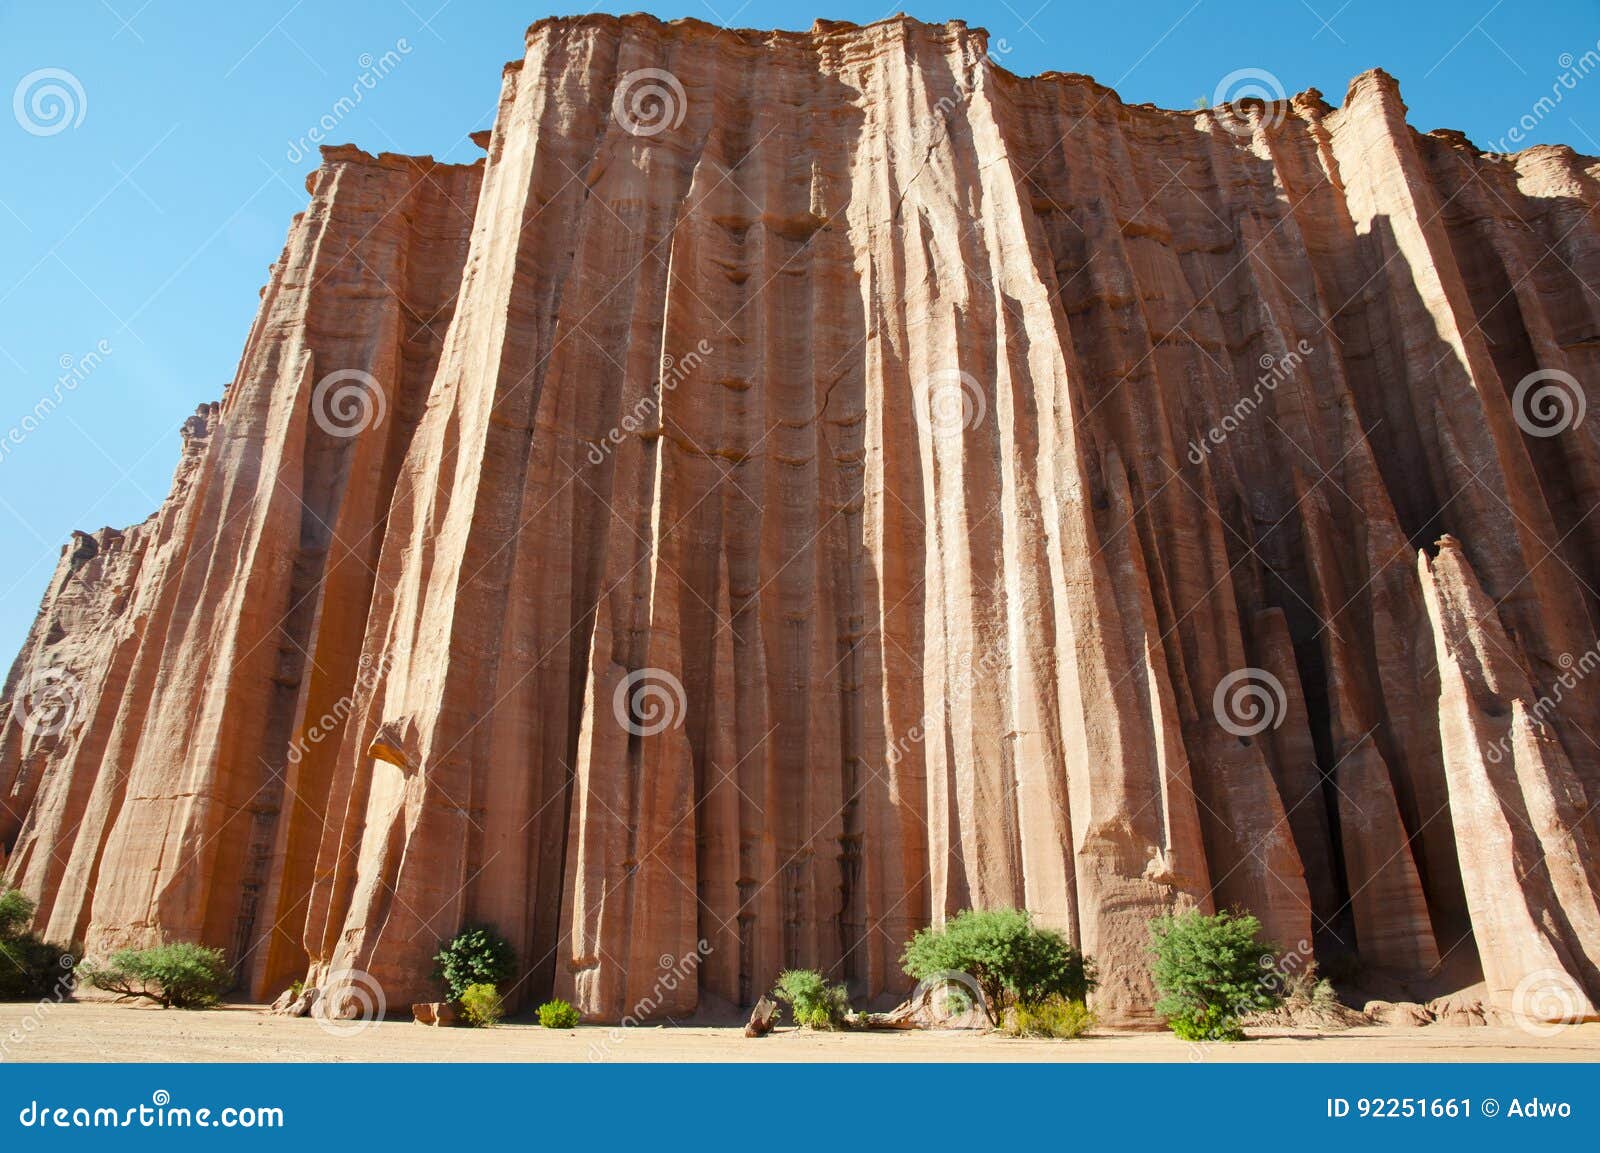 gothic cathedral rock formation - talampaya national park - argentina